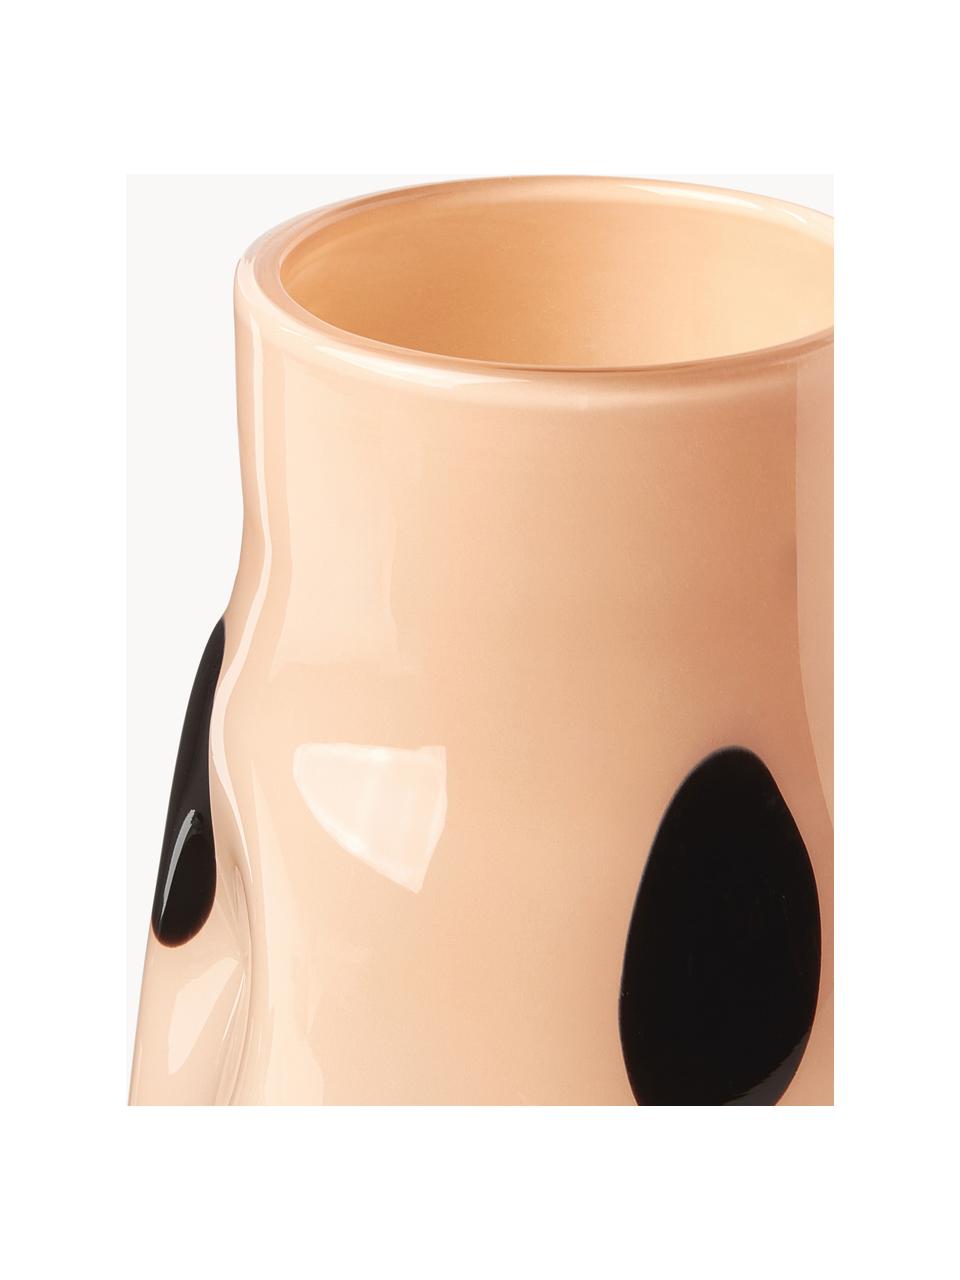 Glas-Vase Romilly, H 32 cm, Glas, Peach, Schwarz, Ø 21 x H 32 cm